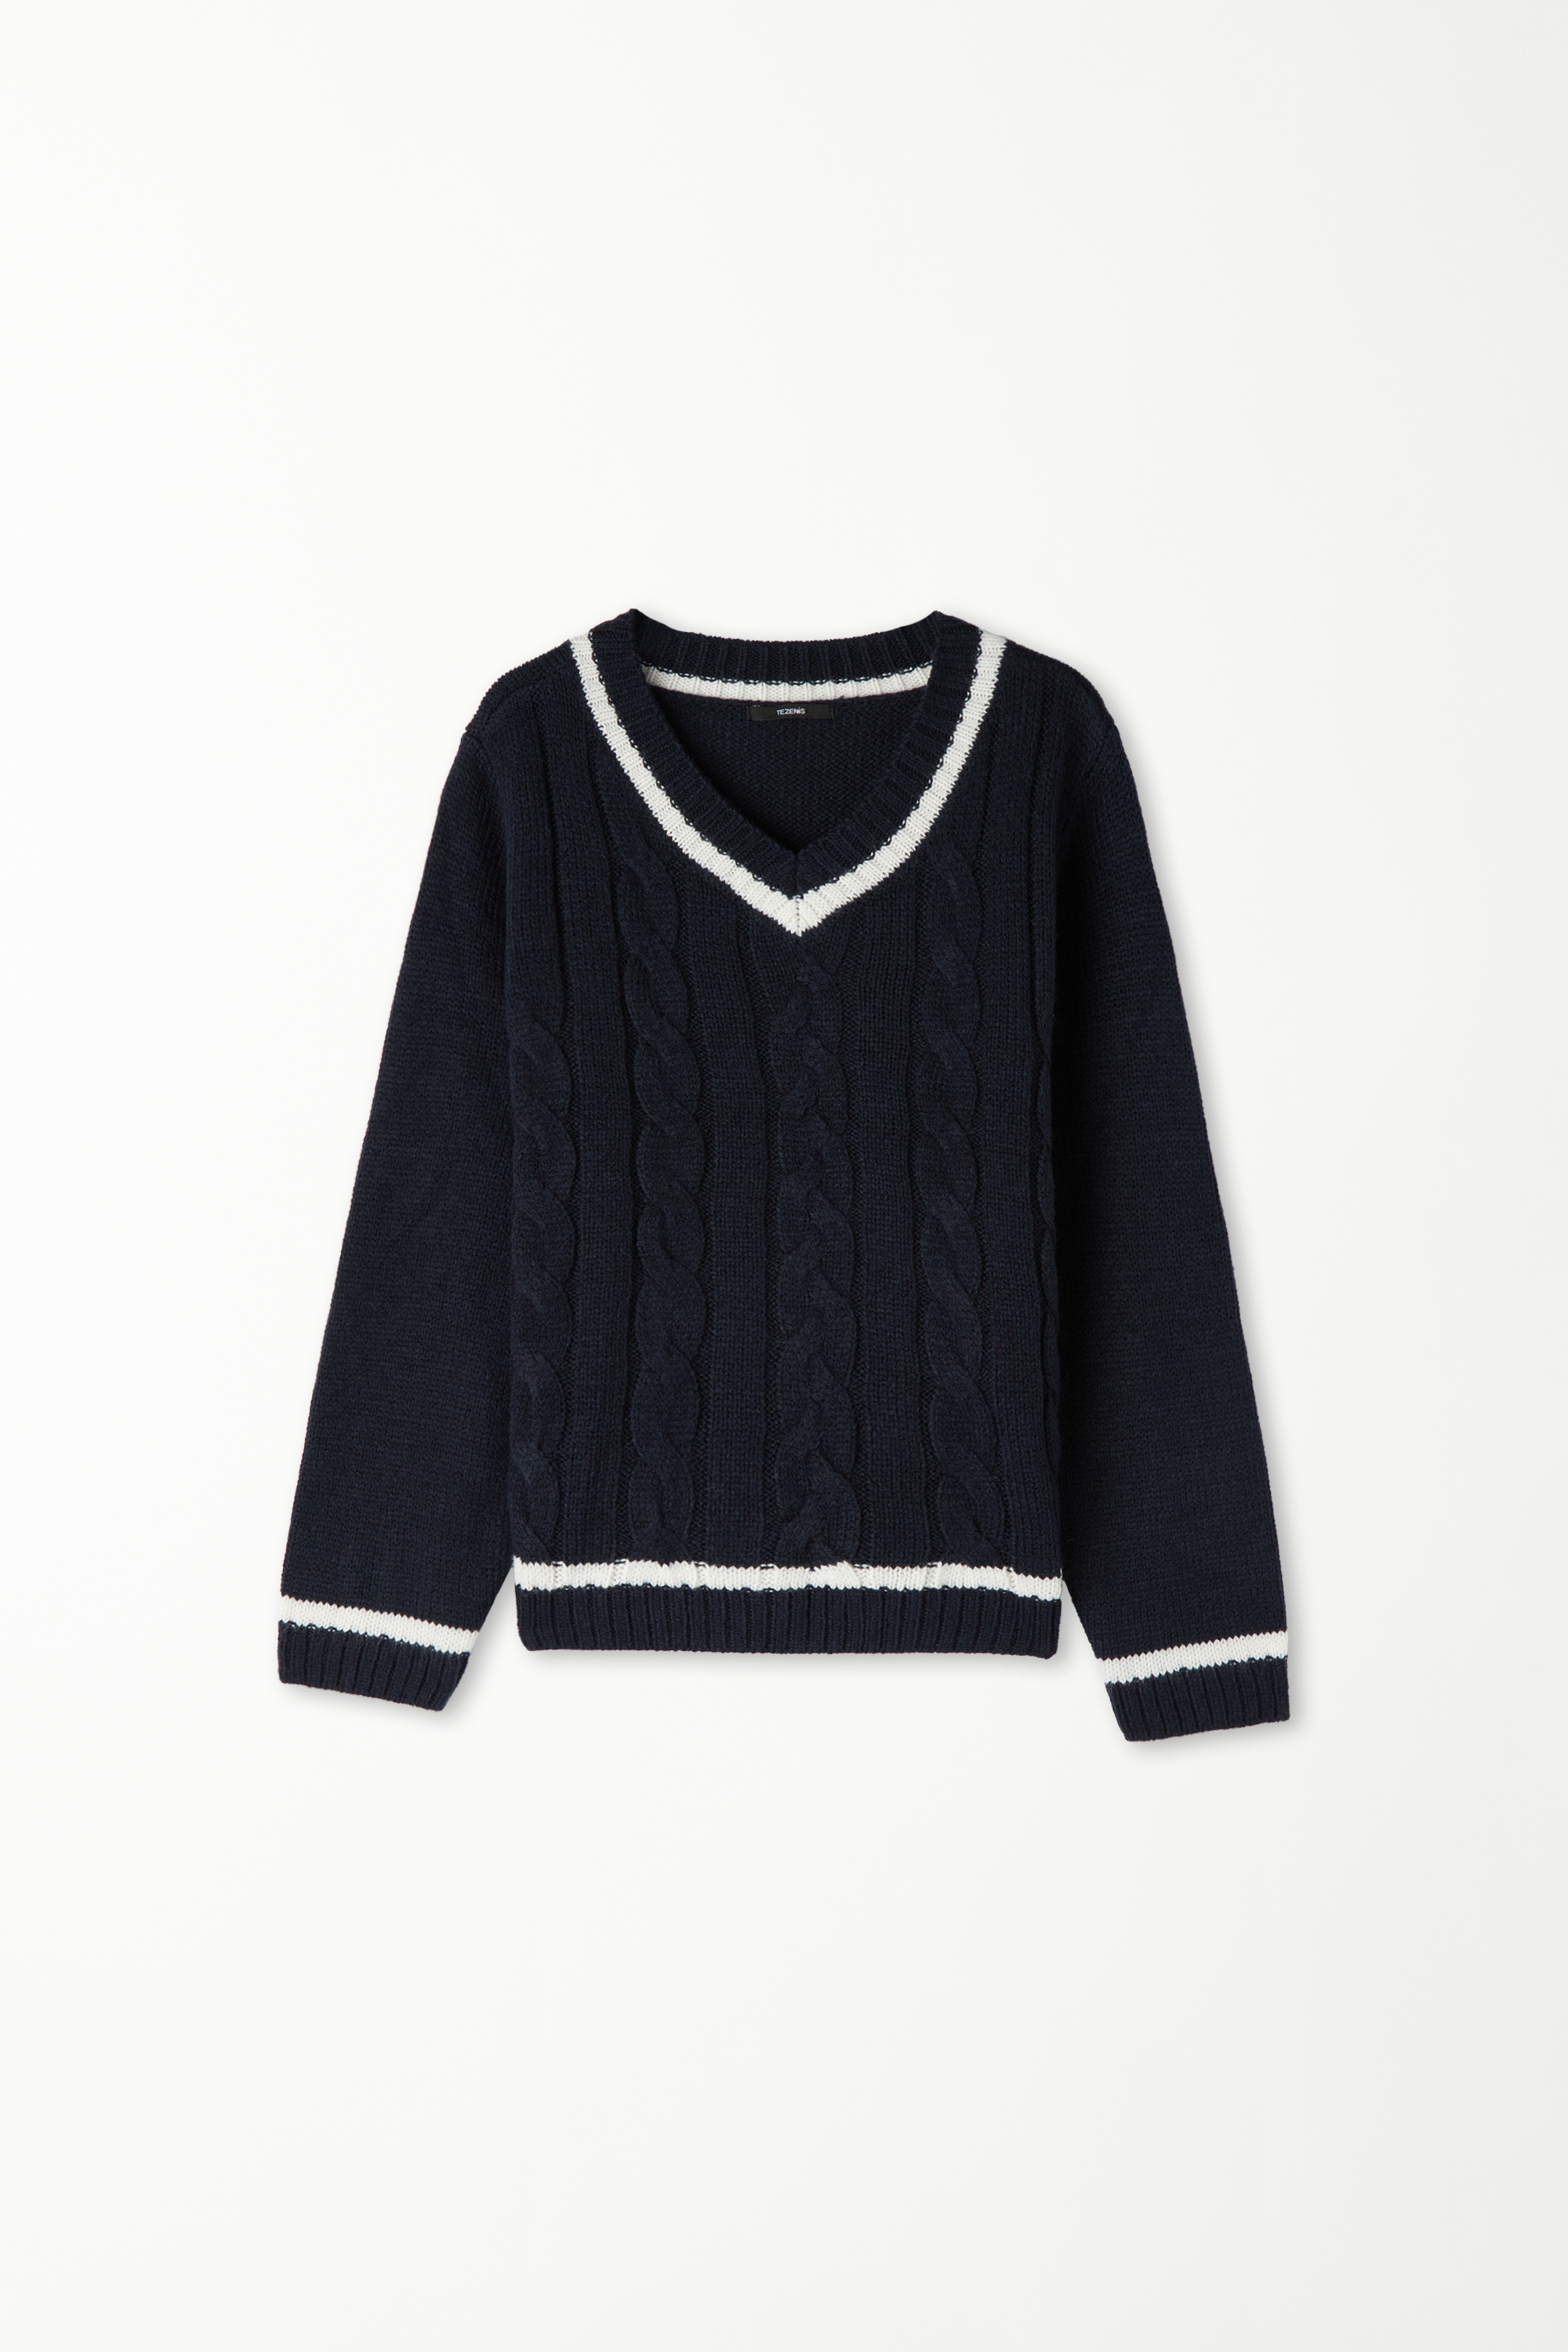 Boys’ Long-Sleeved V-Neck Braid Sweater